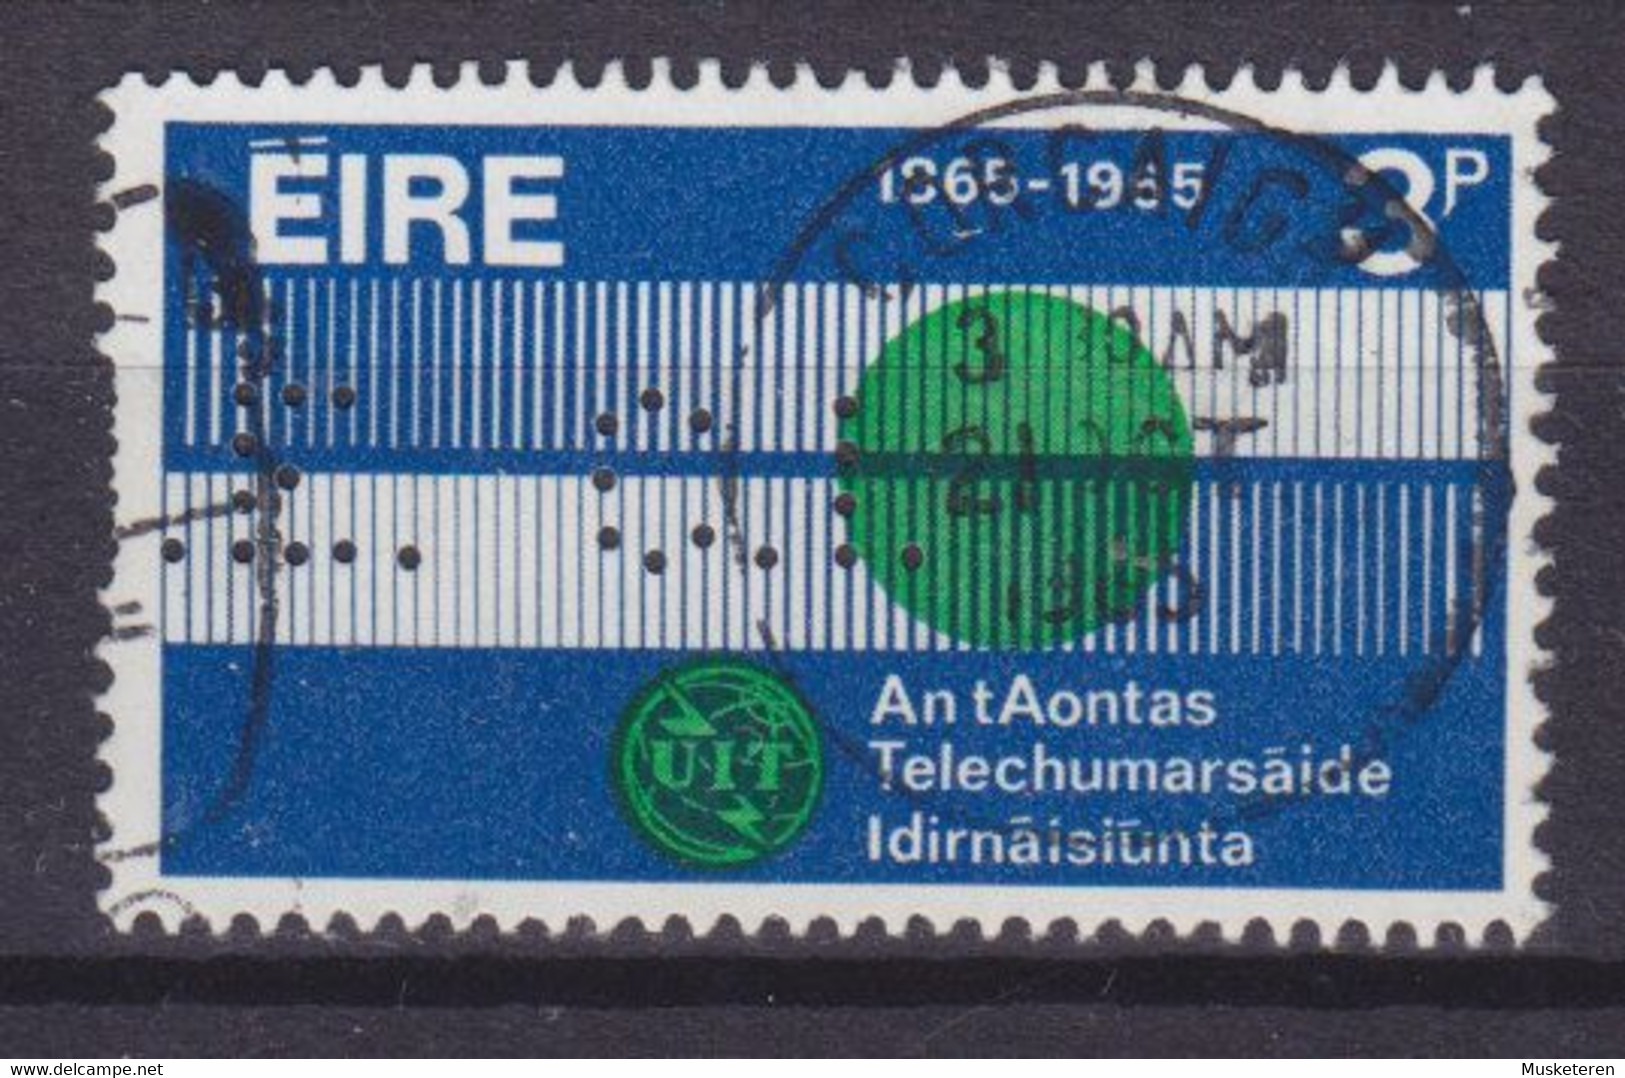 Ireland Perfin Perforé Lochung 'E.C.I.'? ERROR Variety Misplaced Perf. UIT Stamp CORCAIGH Cork 1965 Cancel - Non Dentelés, épreuves & Variétés